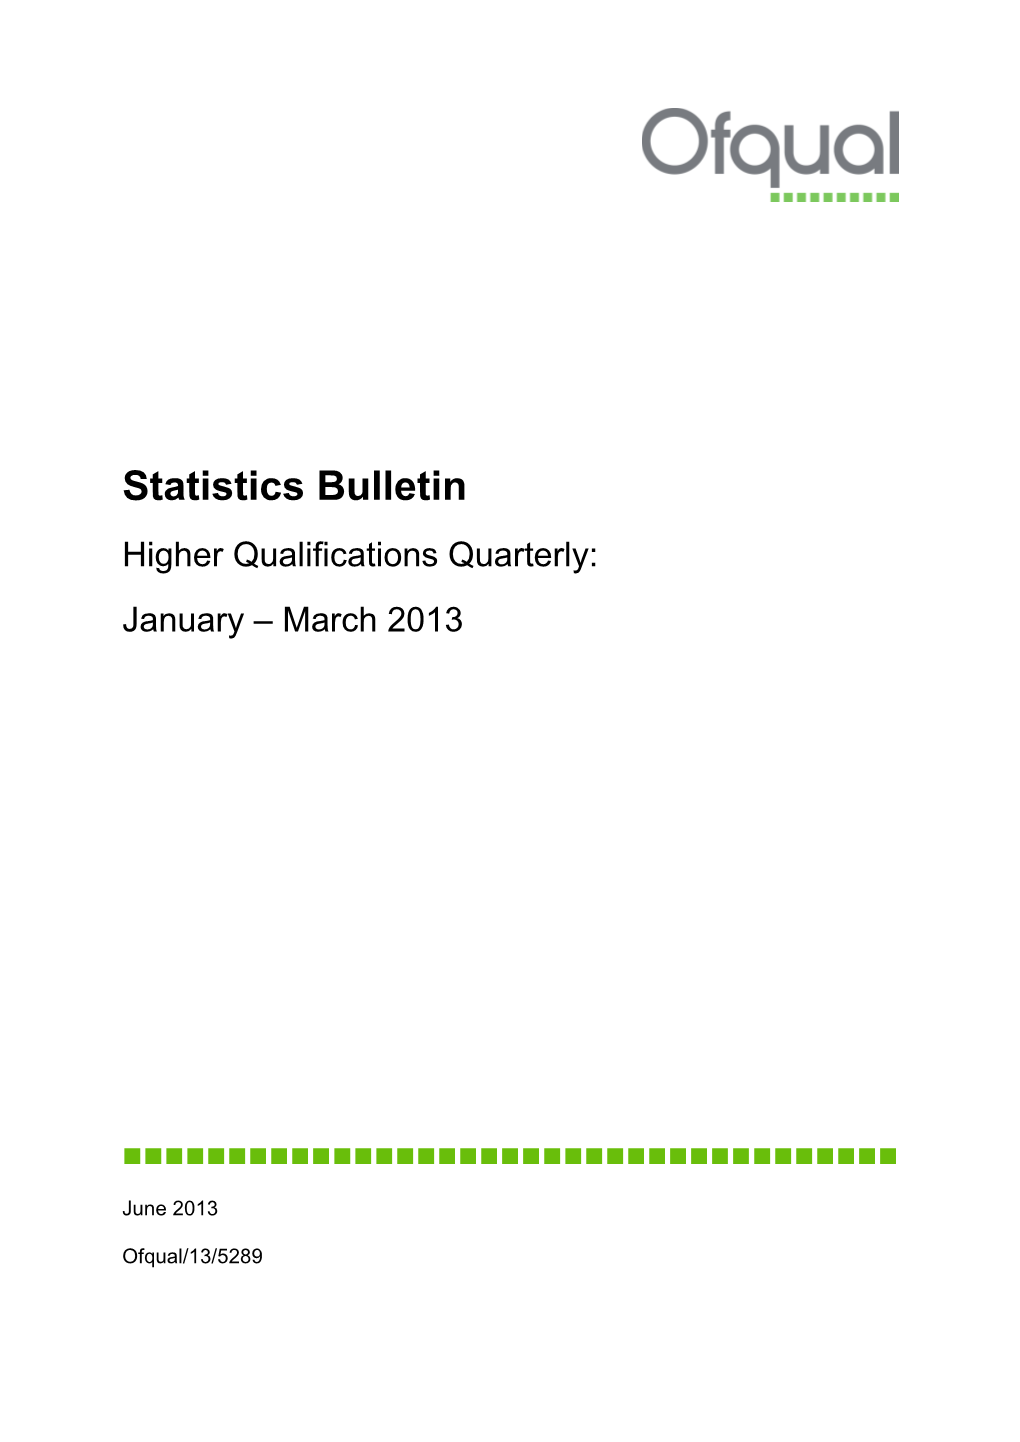 Statistics Bulletin: Higher Qualifications Quarterly: January